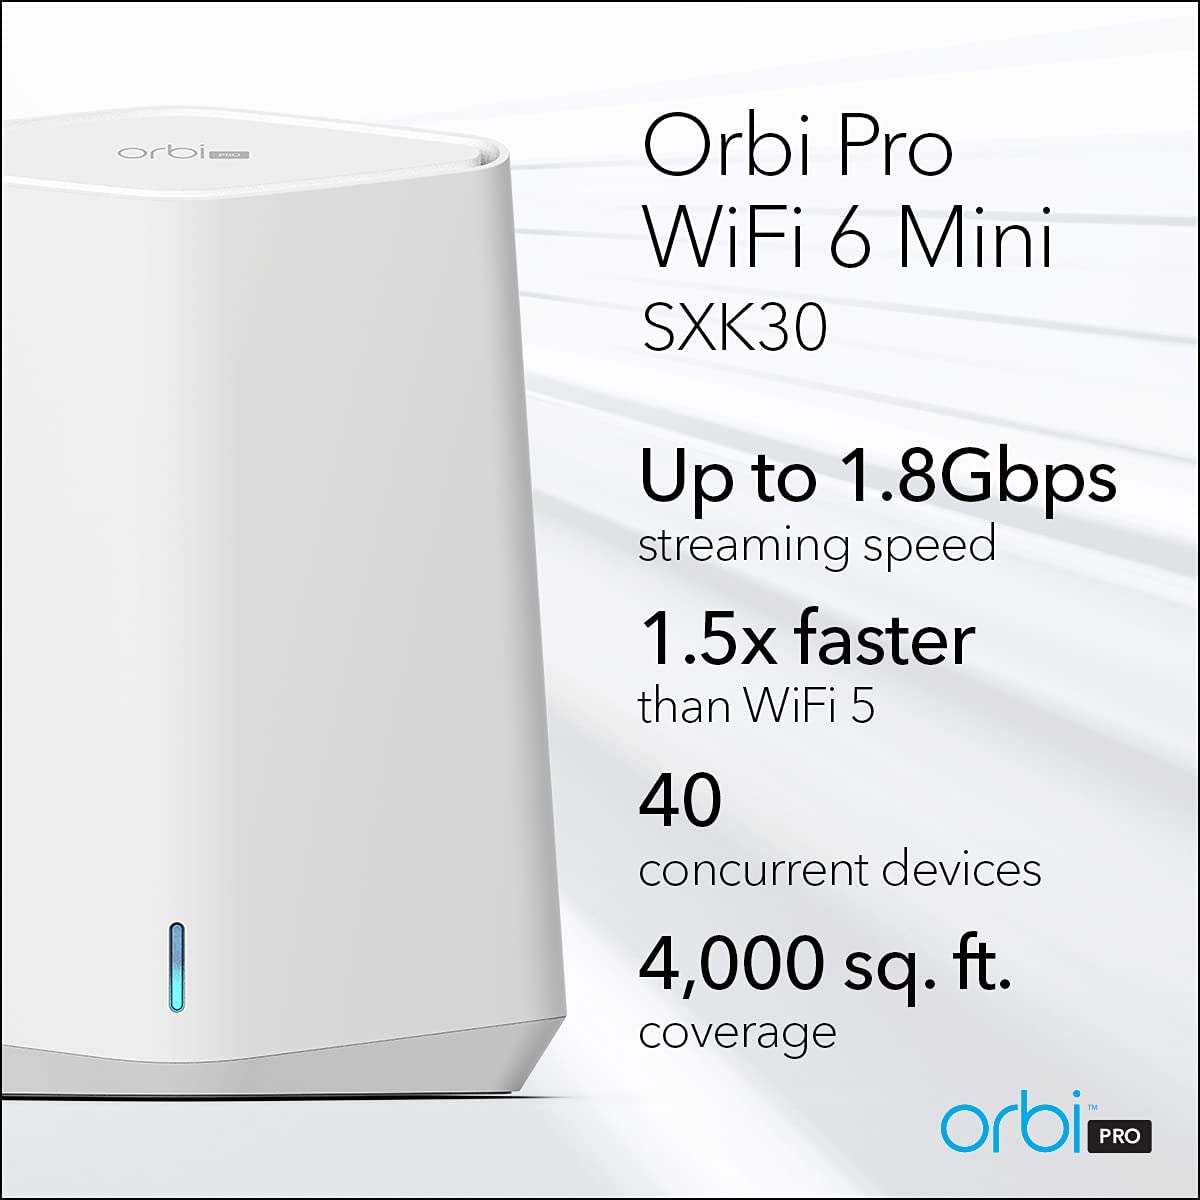 Netgear Orbi Pro WiFi 6 Mini Mesh System On Sale for 33% Off [Deal]